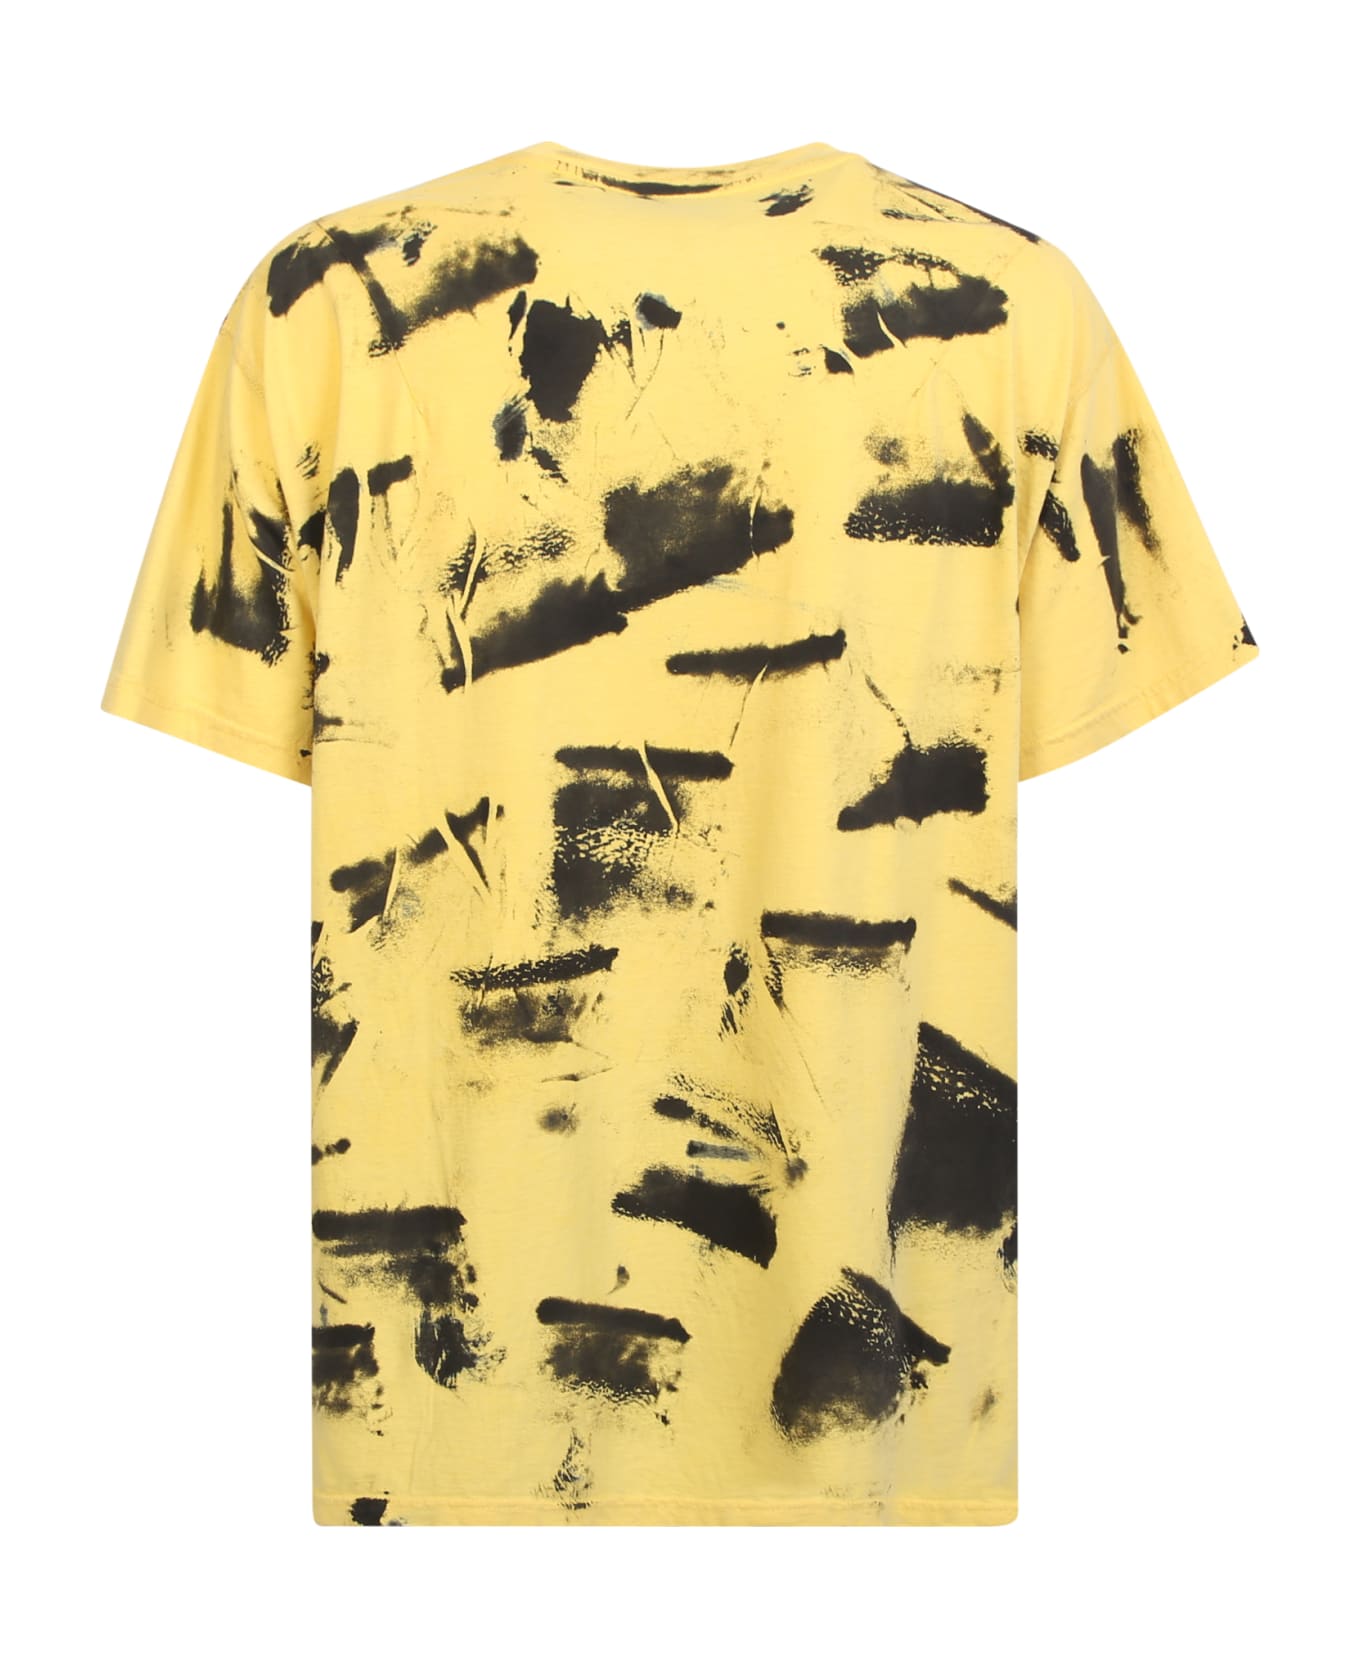 Mauna Kea Yellow Cotton T-shirt - Yellow